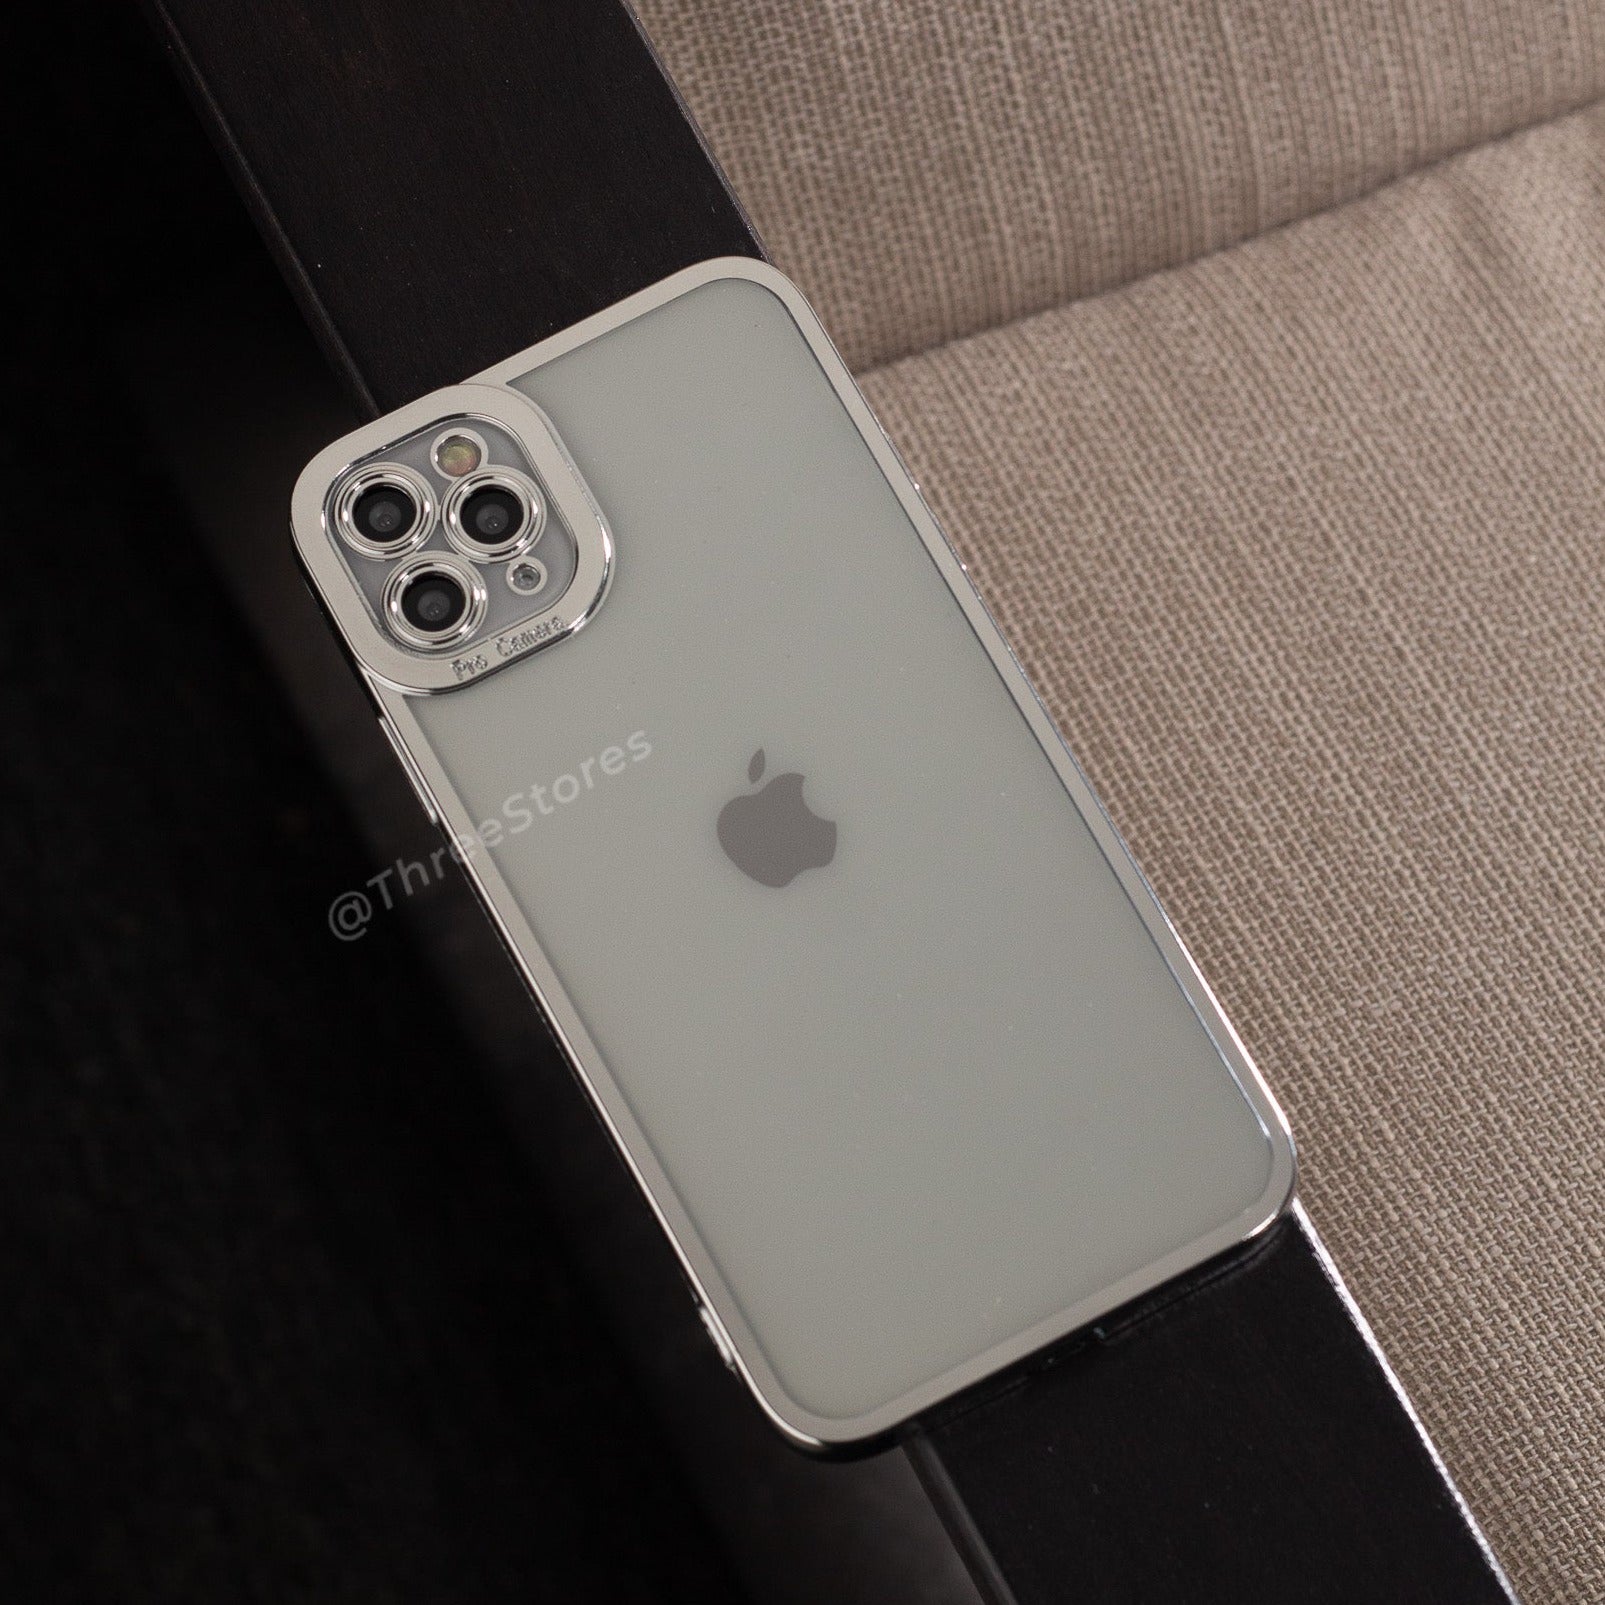 PhoneCase Slim Camera Protection Case iPhone 11 Pro Max Three store